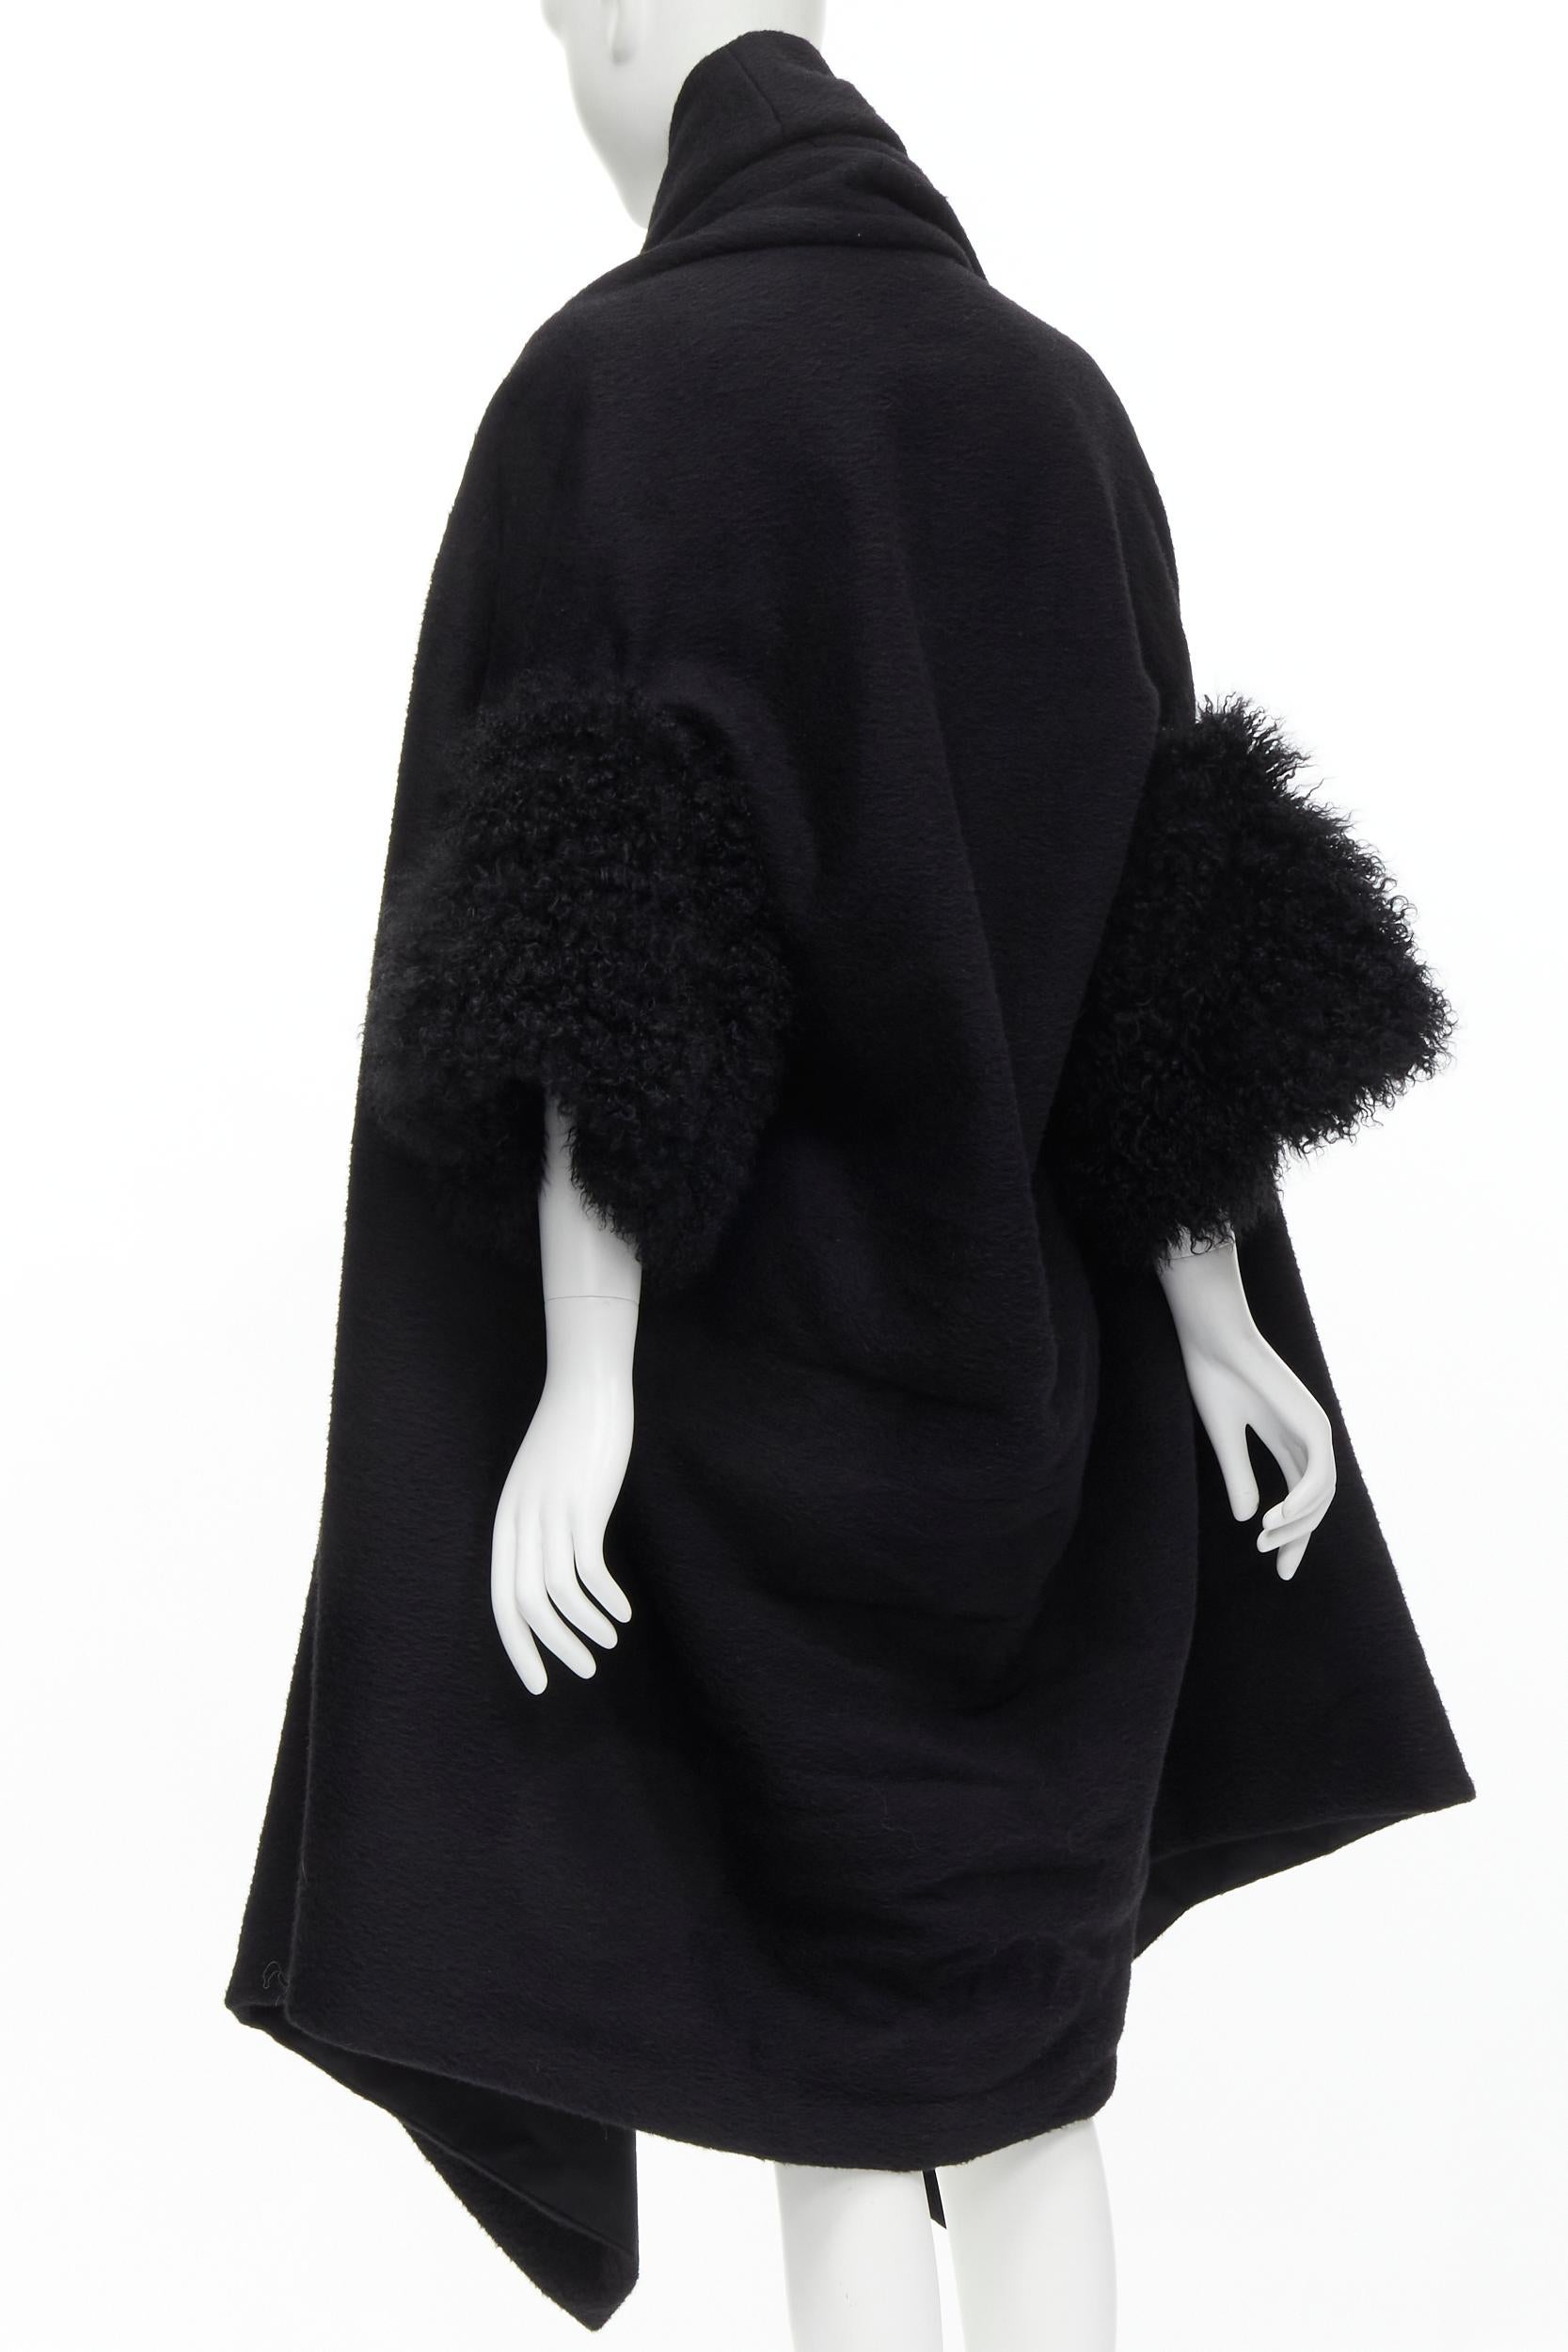 Women's YOHJI YAMAMOTO black brushed wool shearling cuff draped cocoon coat S